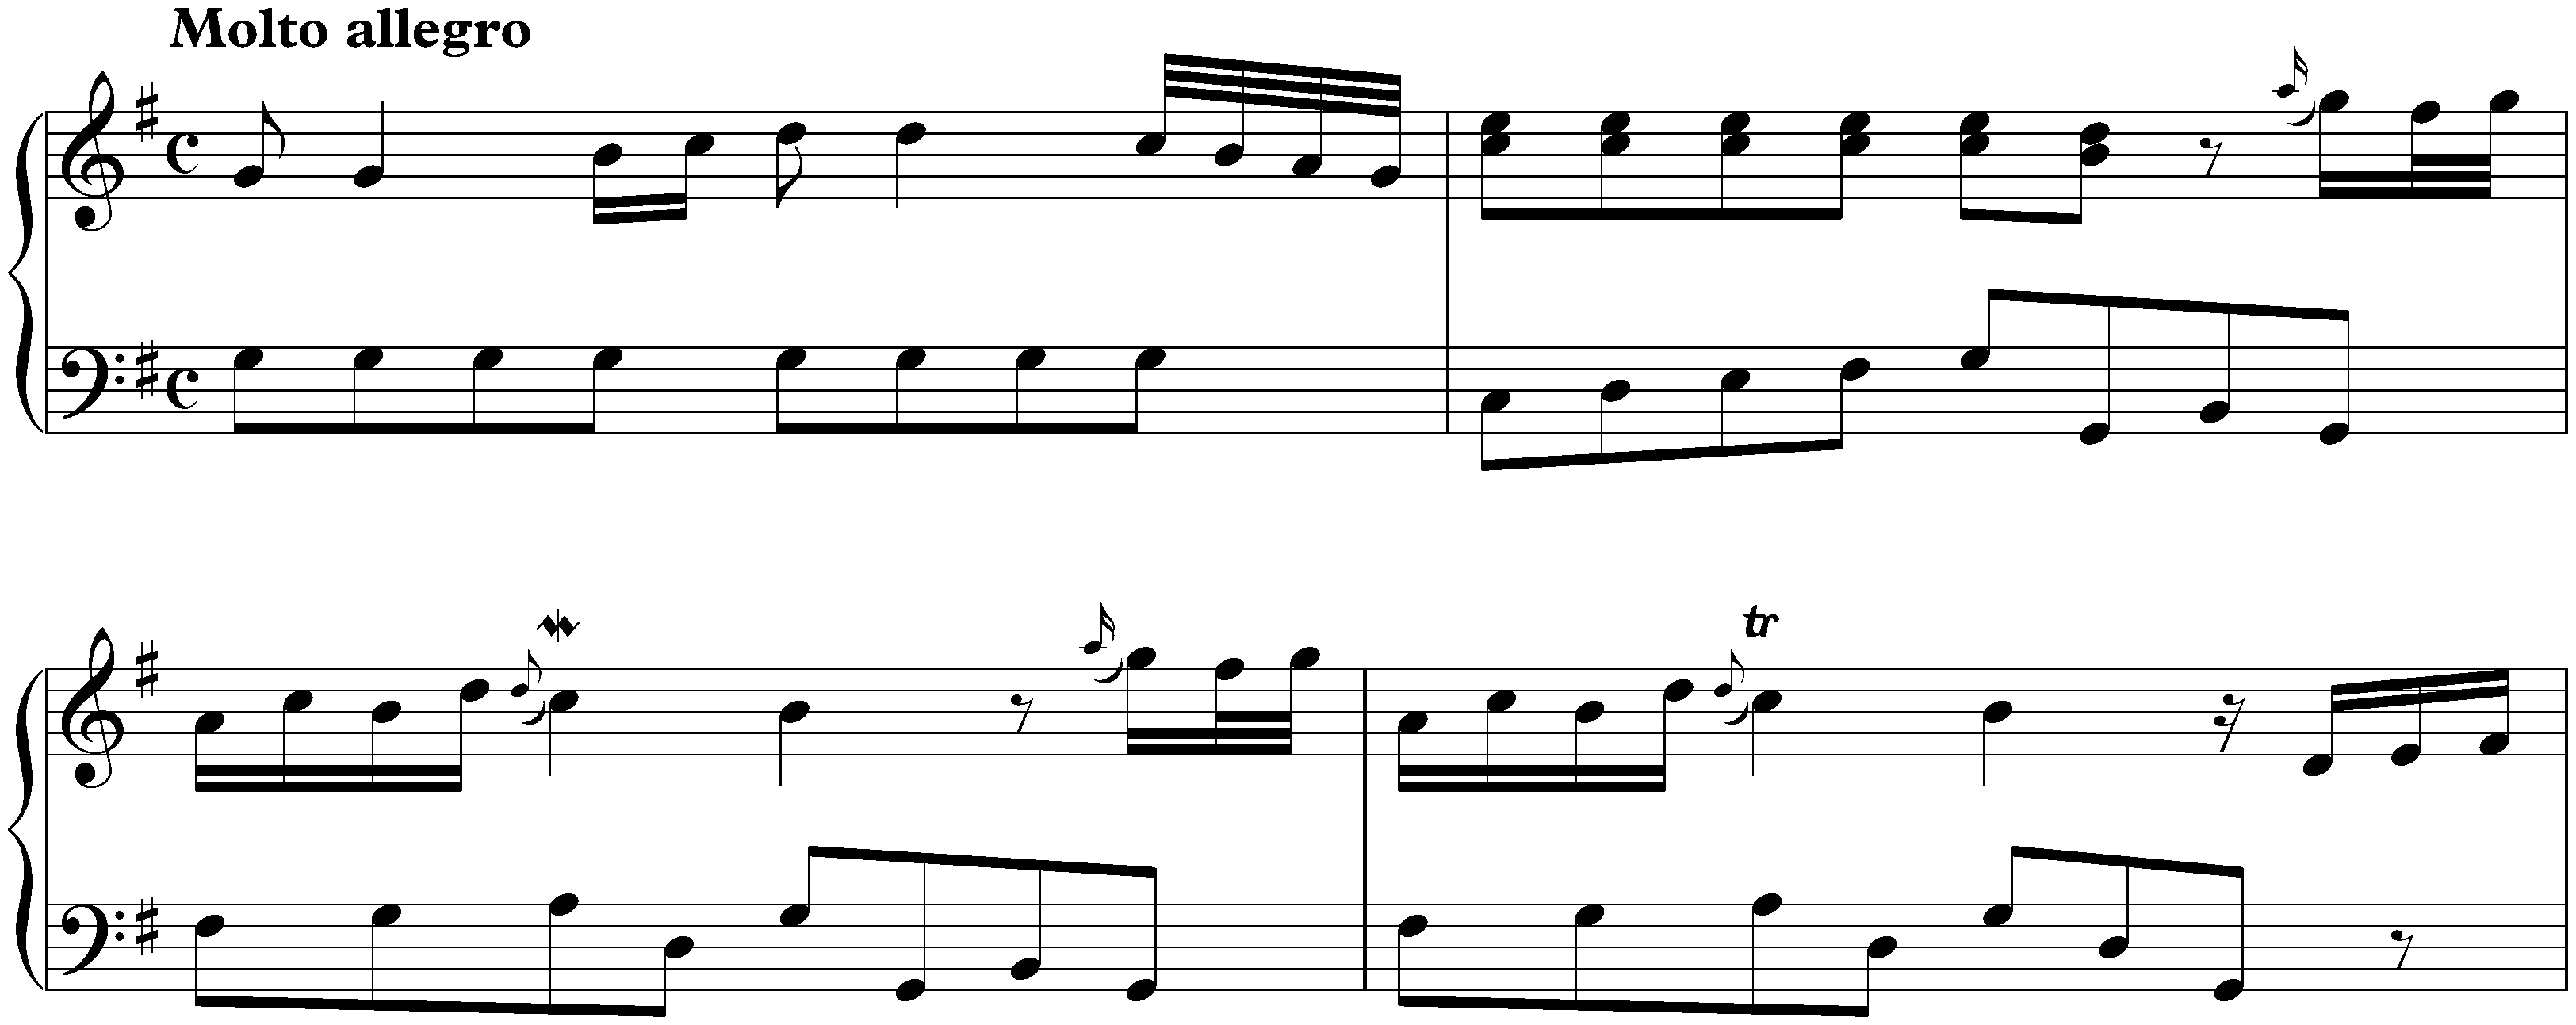 Notebook for Nannerl, KV 1–8; 51. Concerto movement in G major